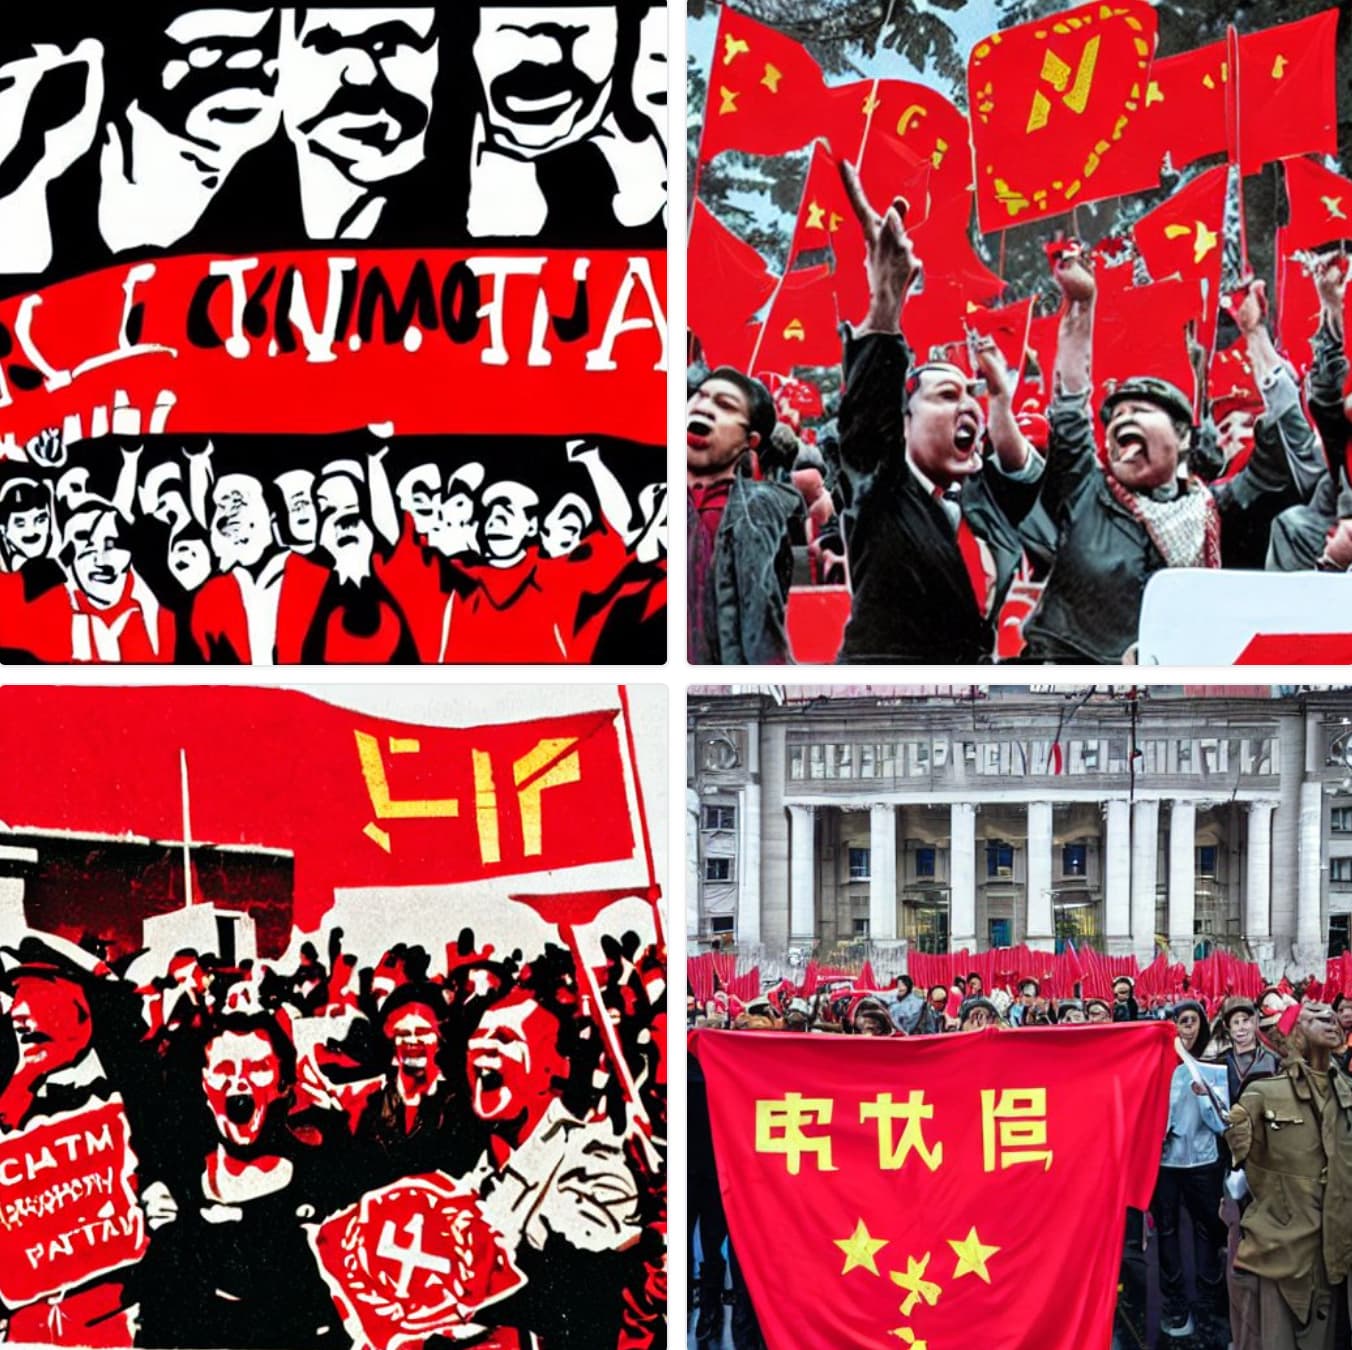 Communist party